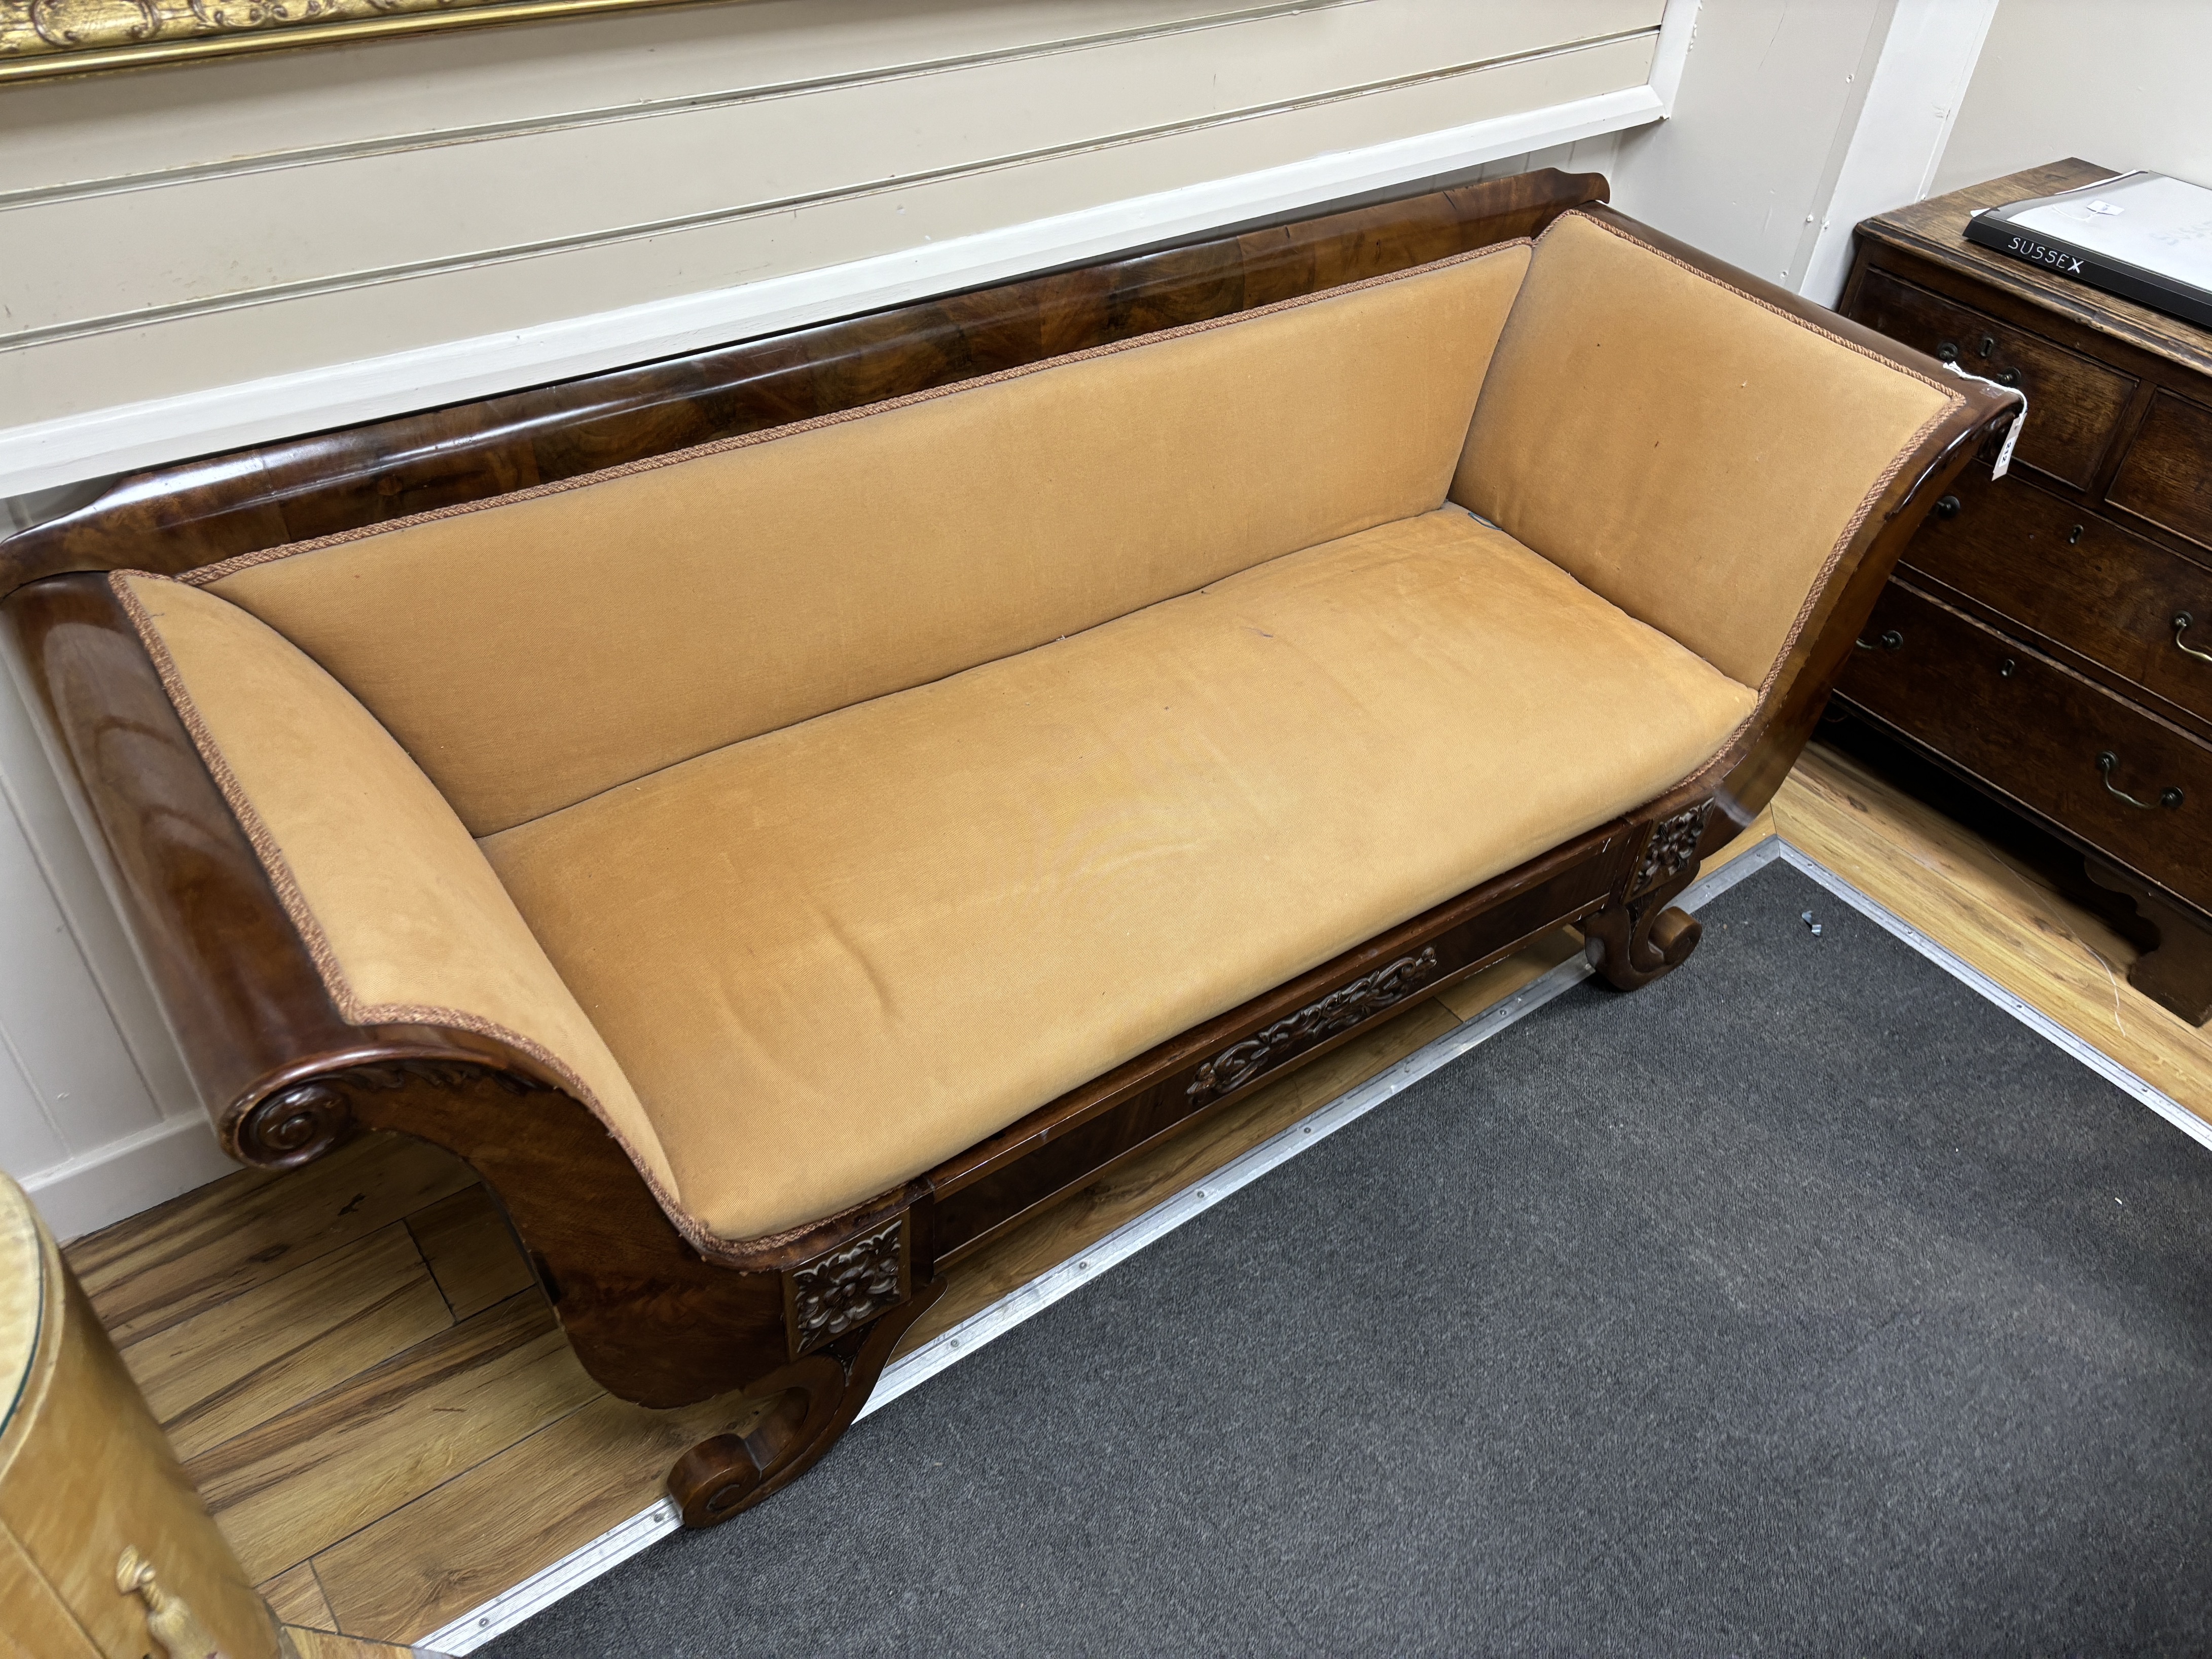 A 19th century mahogany Biedermier settee, width 180cm, depth 64cm, height 82cm. Condition - fair